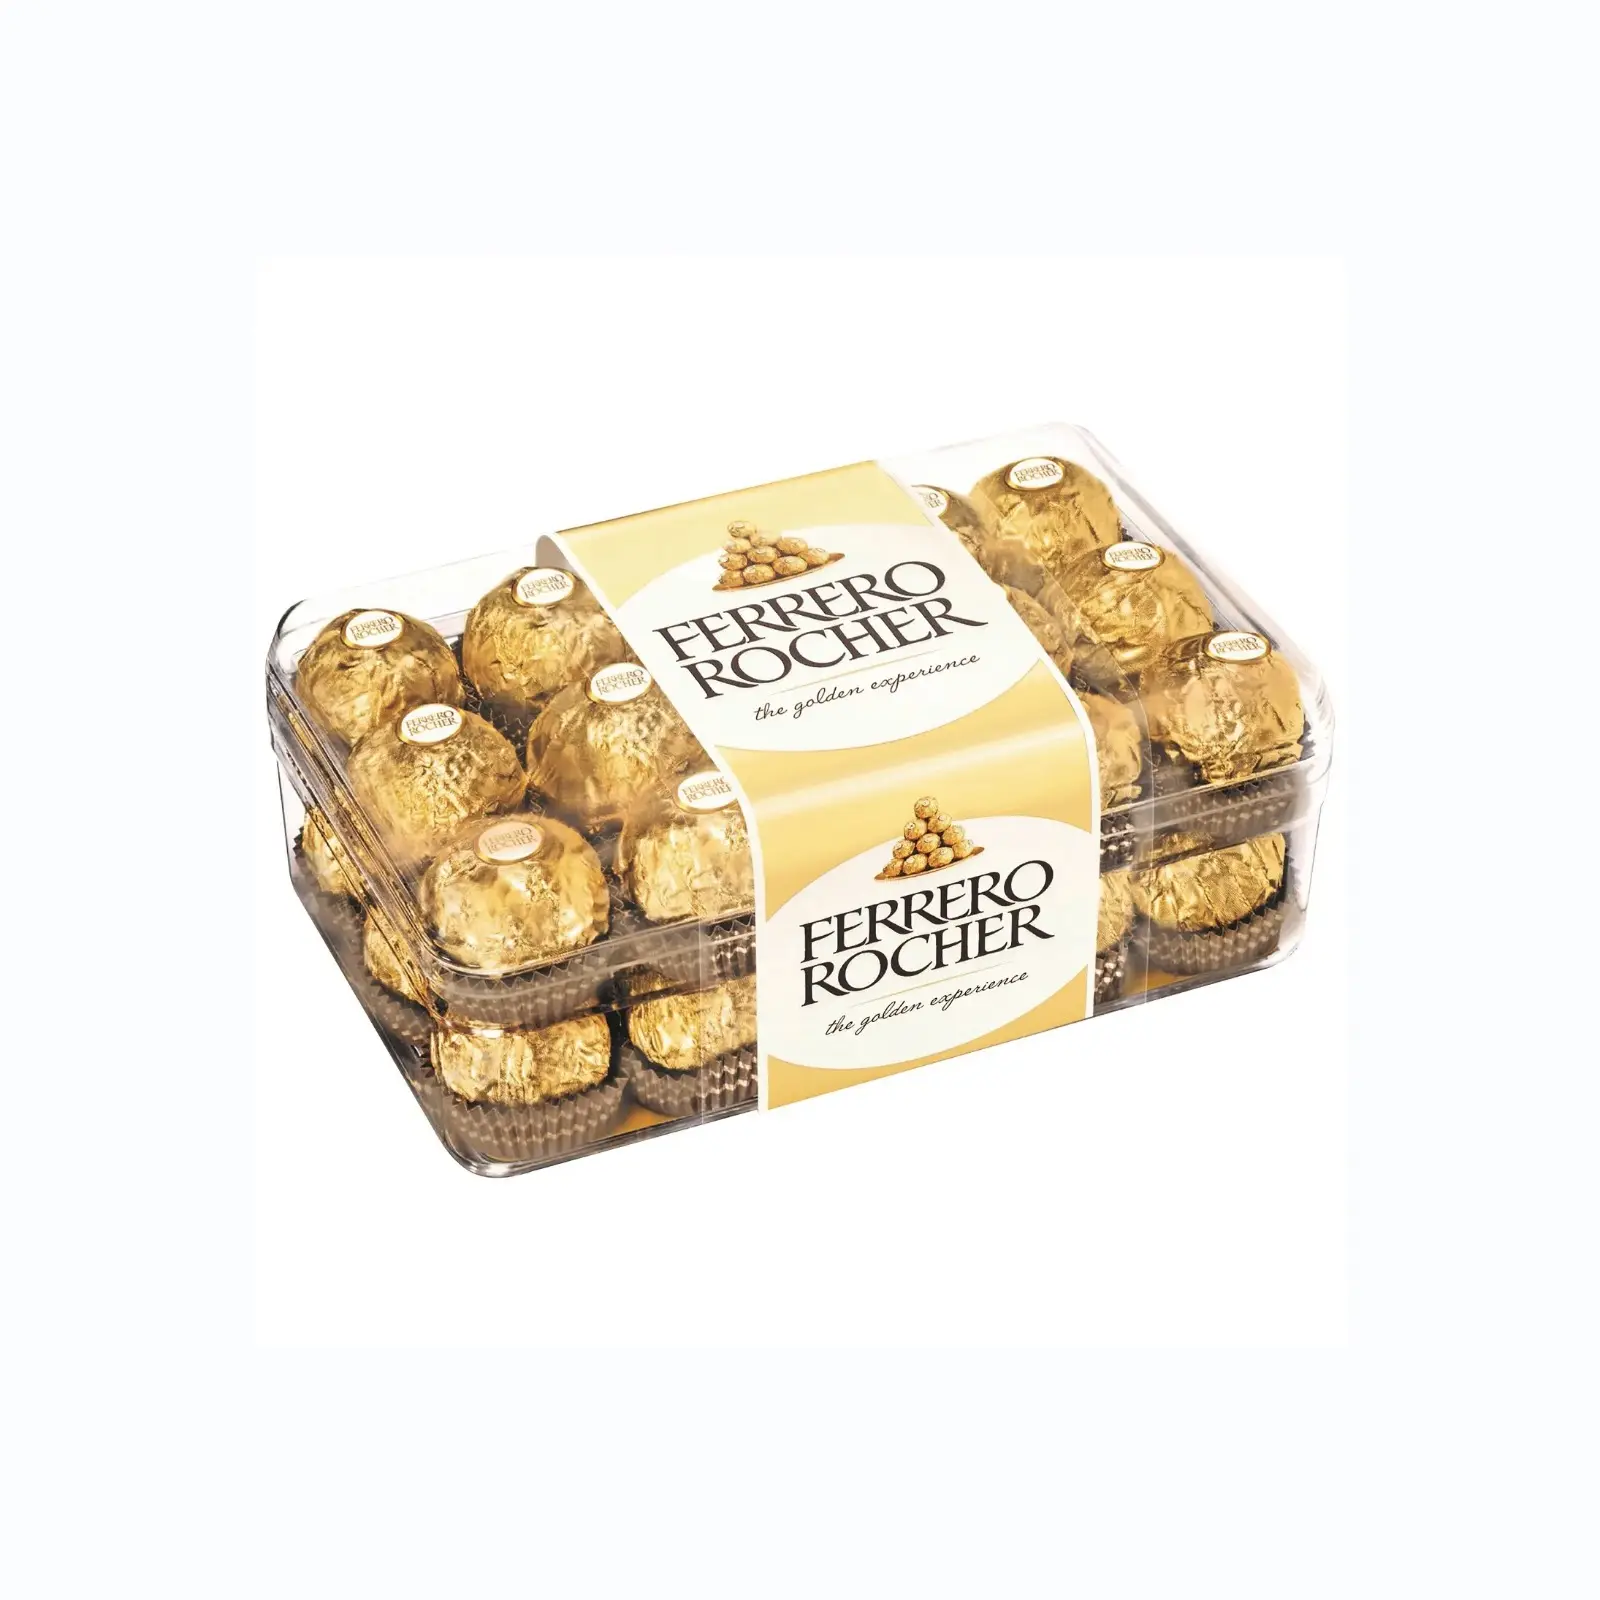 Prix de gros Ferrero Rocher / Ferrero Rocher CHOCOLAT POUR L'EXPORTATION